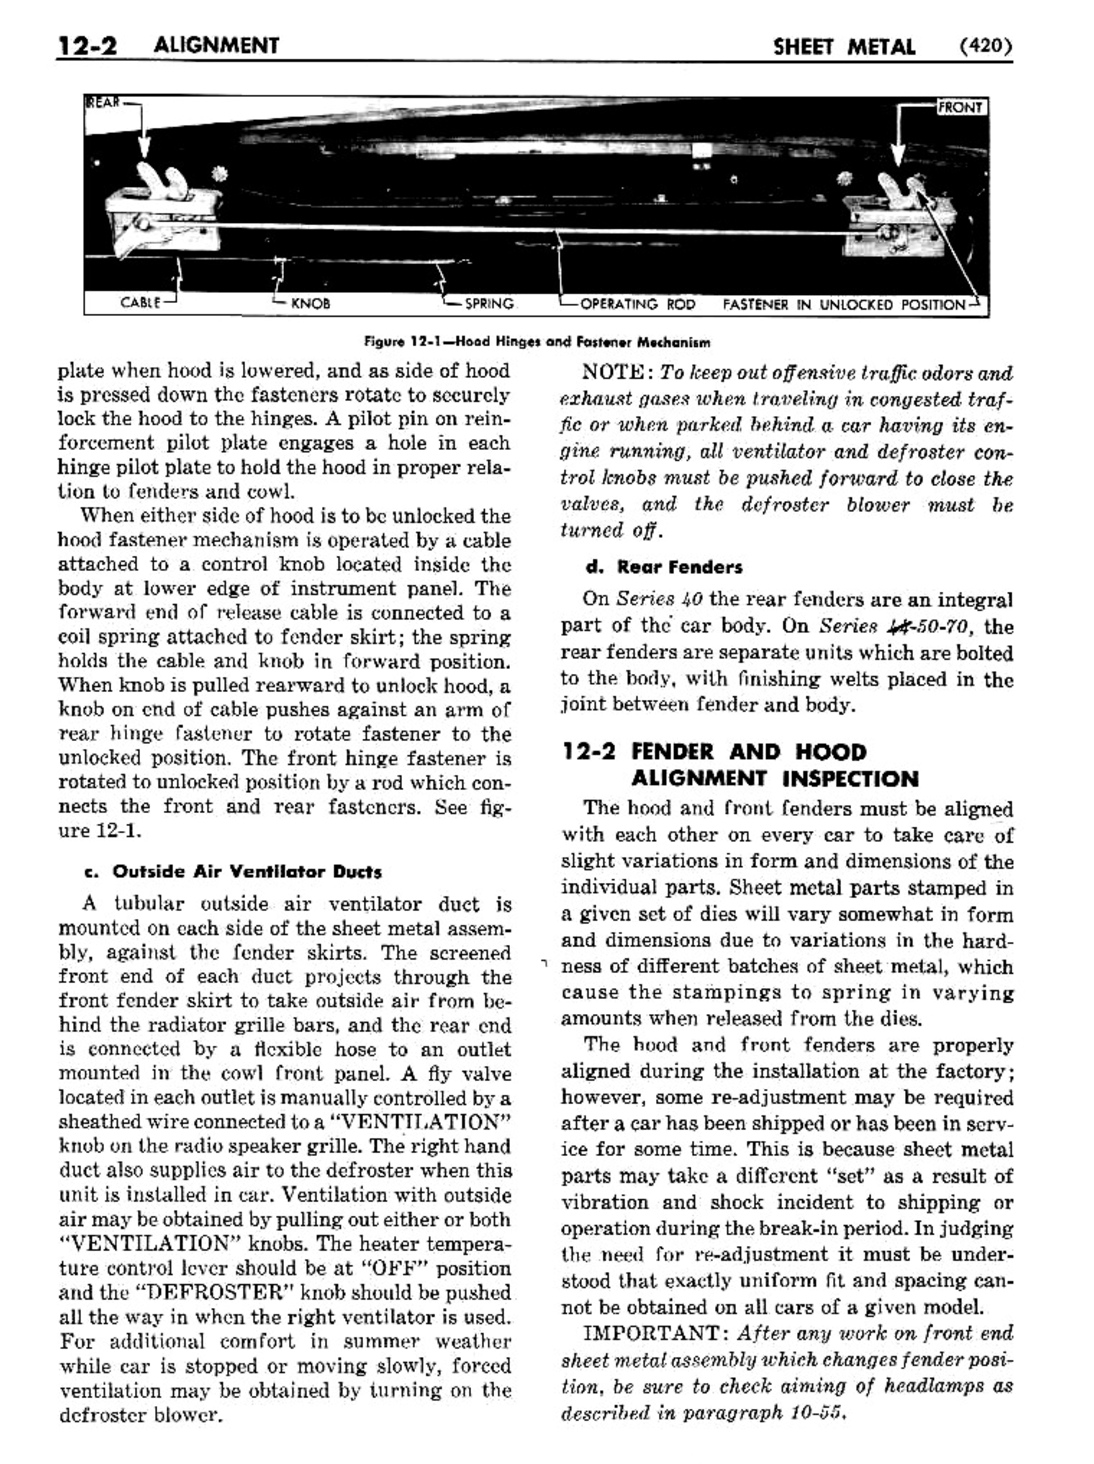 n_13 1951 Buick Shop Manual - Sheet Metal-002-002.jpg